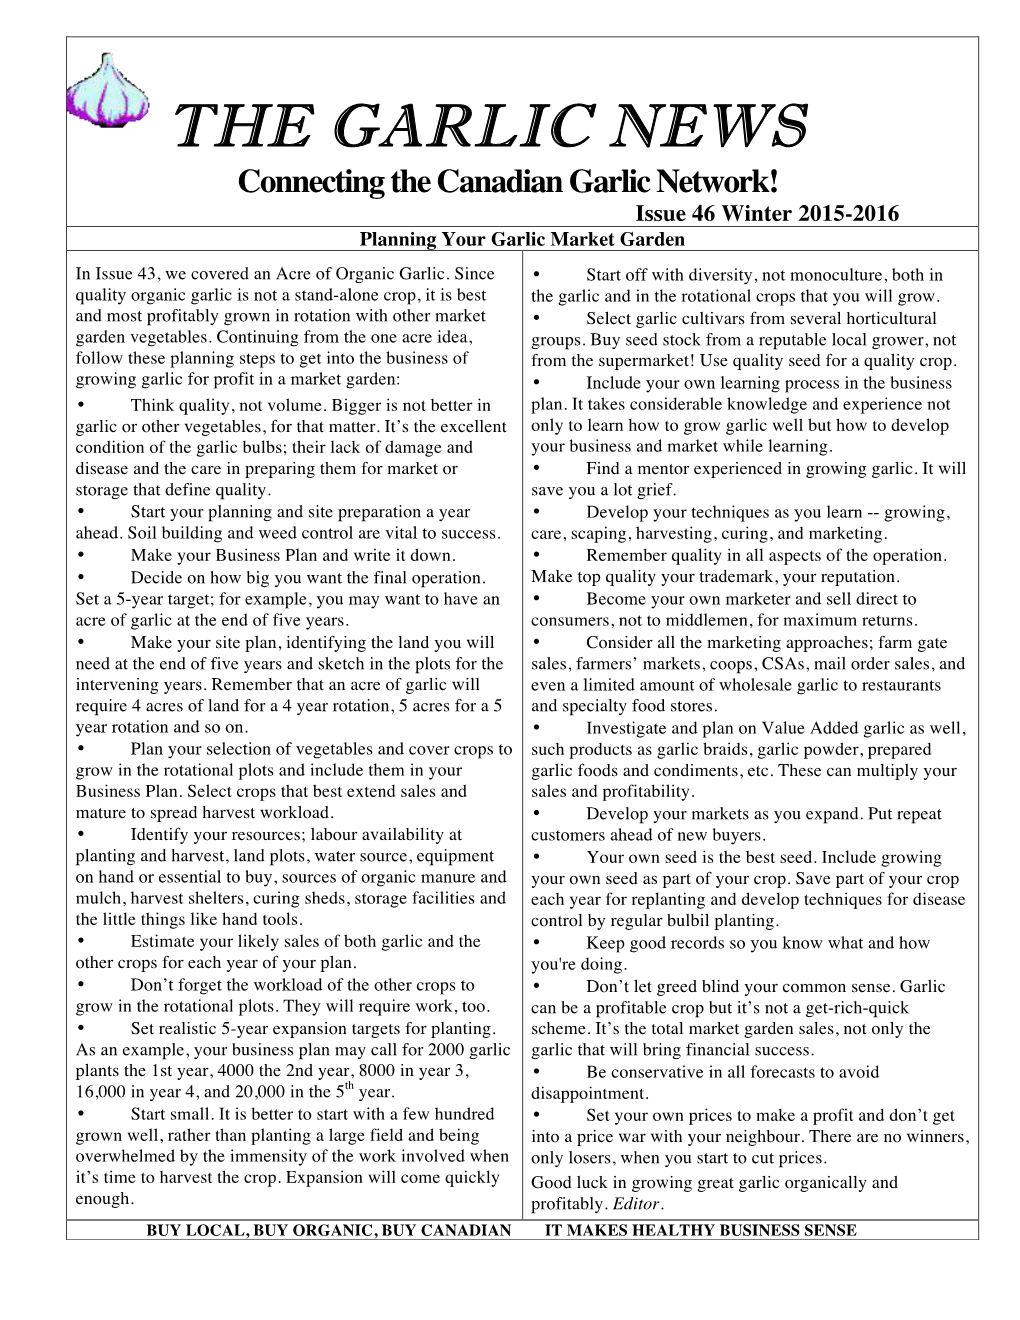 THE GARLIC NEWS Connecting the Canadian Garlic Network! Issue 46 Winter 2015-2016 Planning Your Garlic Market Garden